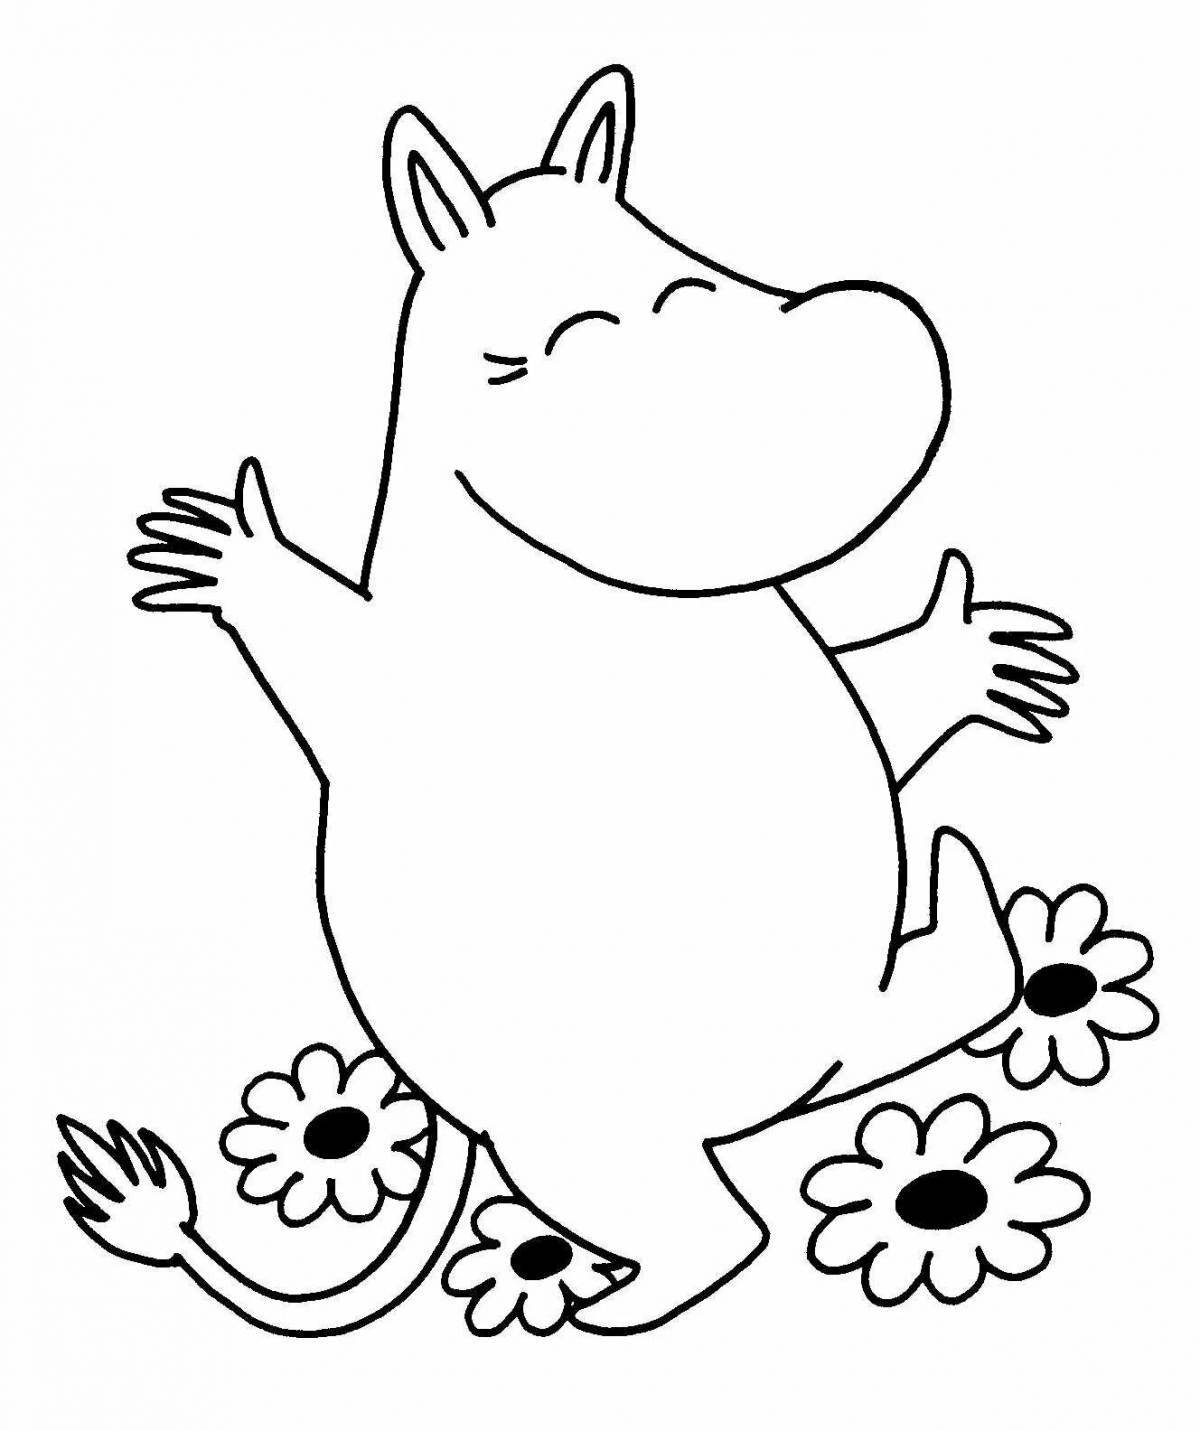 Moomin troll funny coloring book